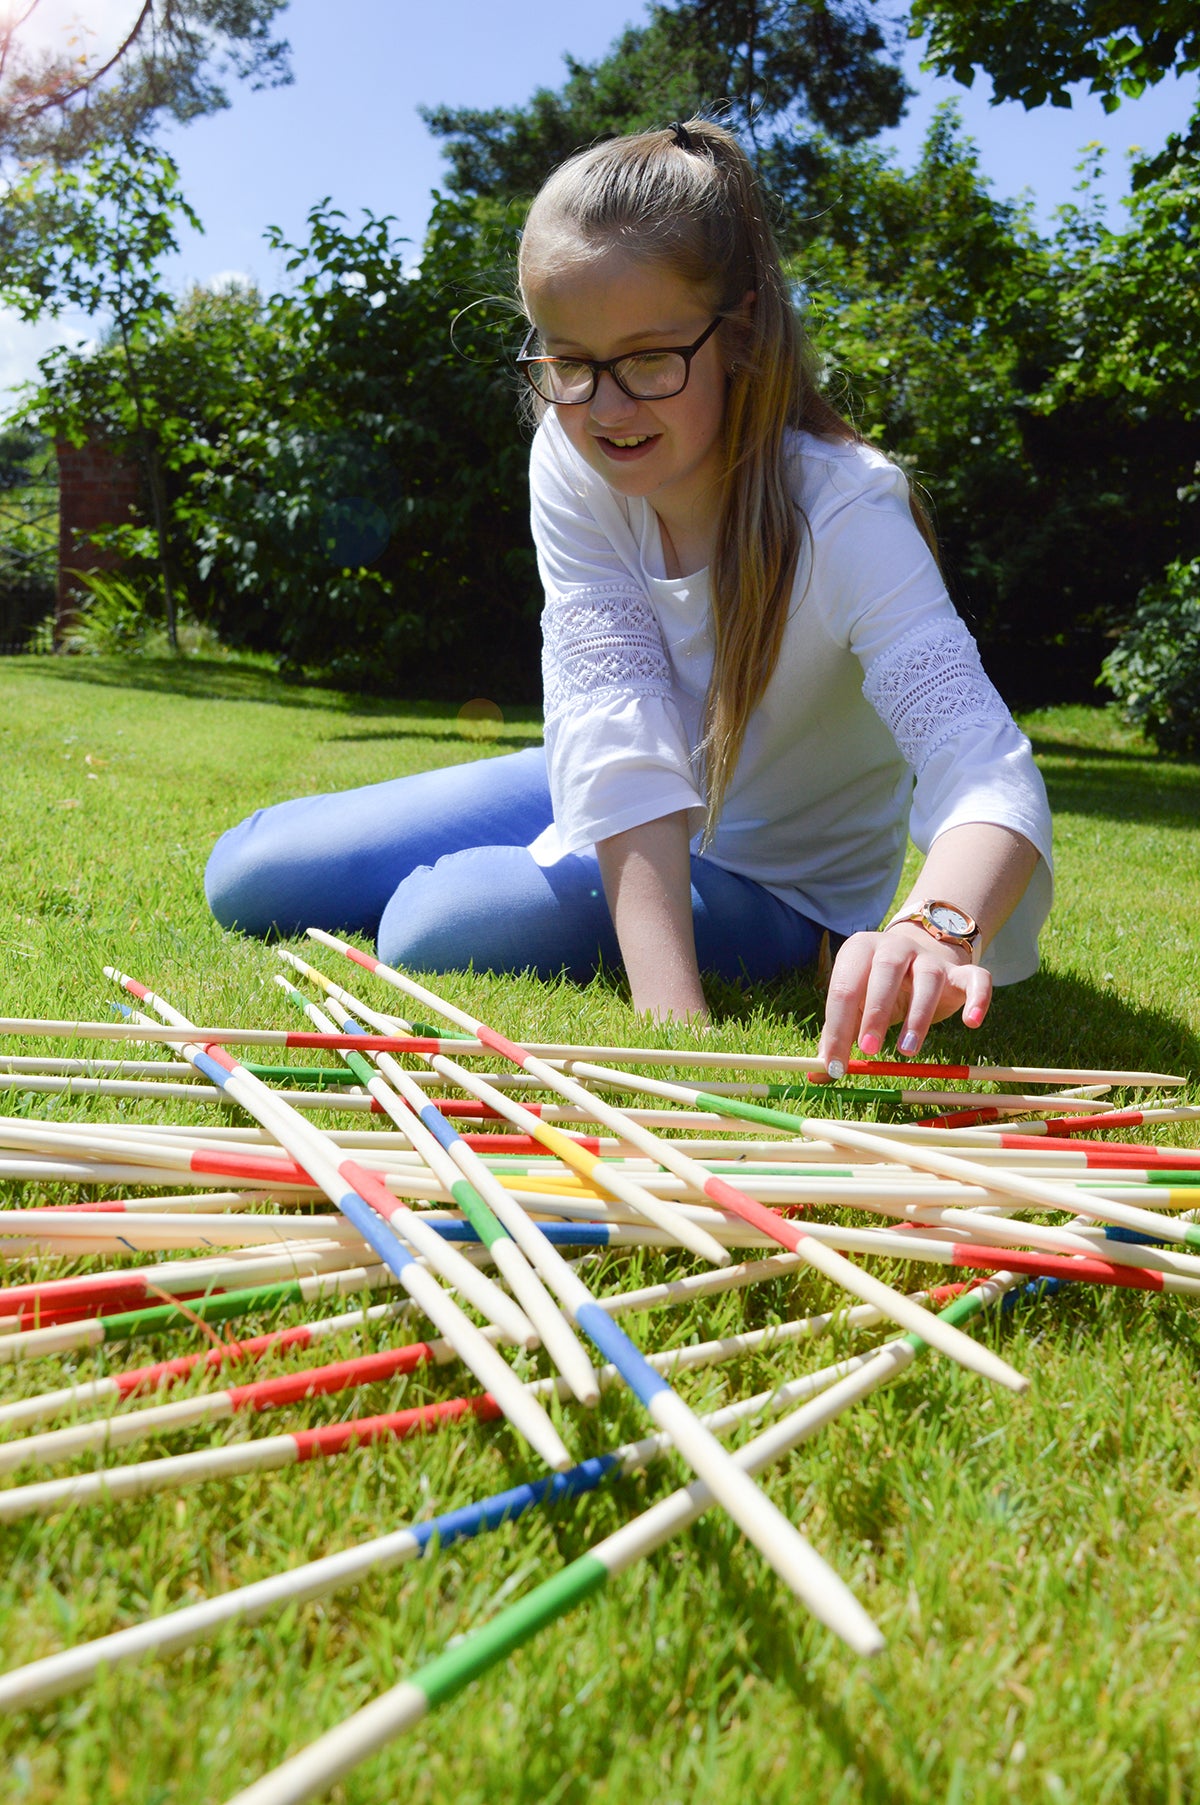 Traditional Garden Games Pick Up Sticks